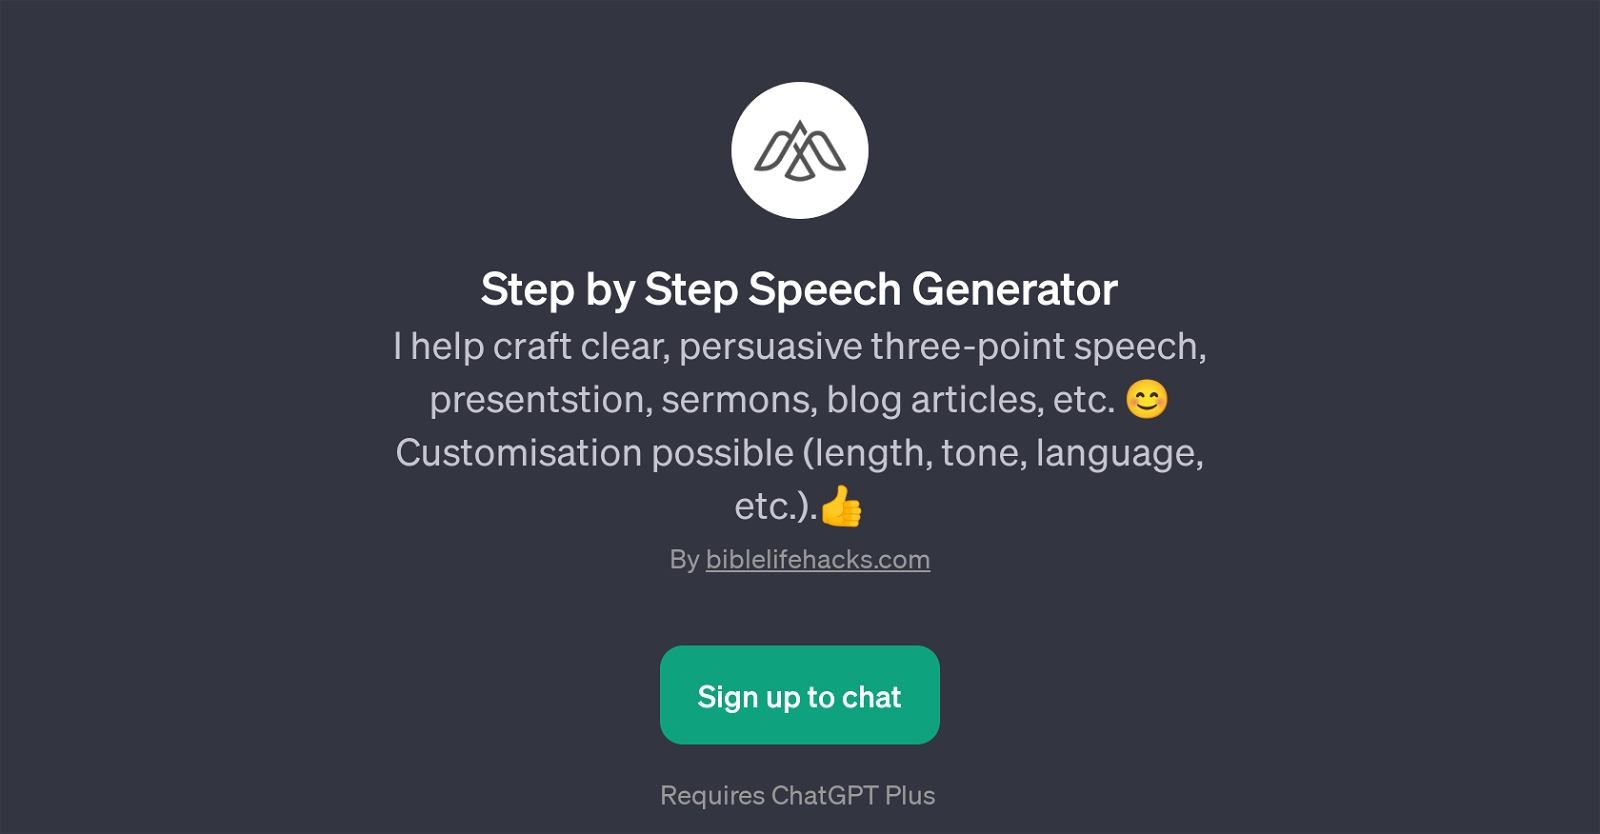 Step by Step Speech Generator website